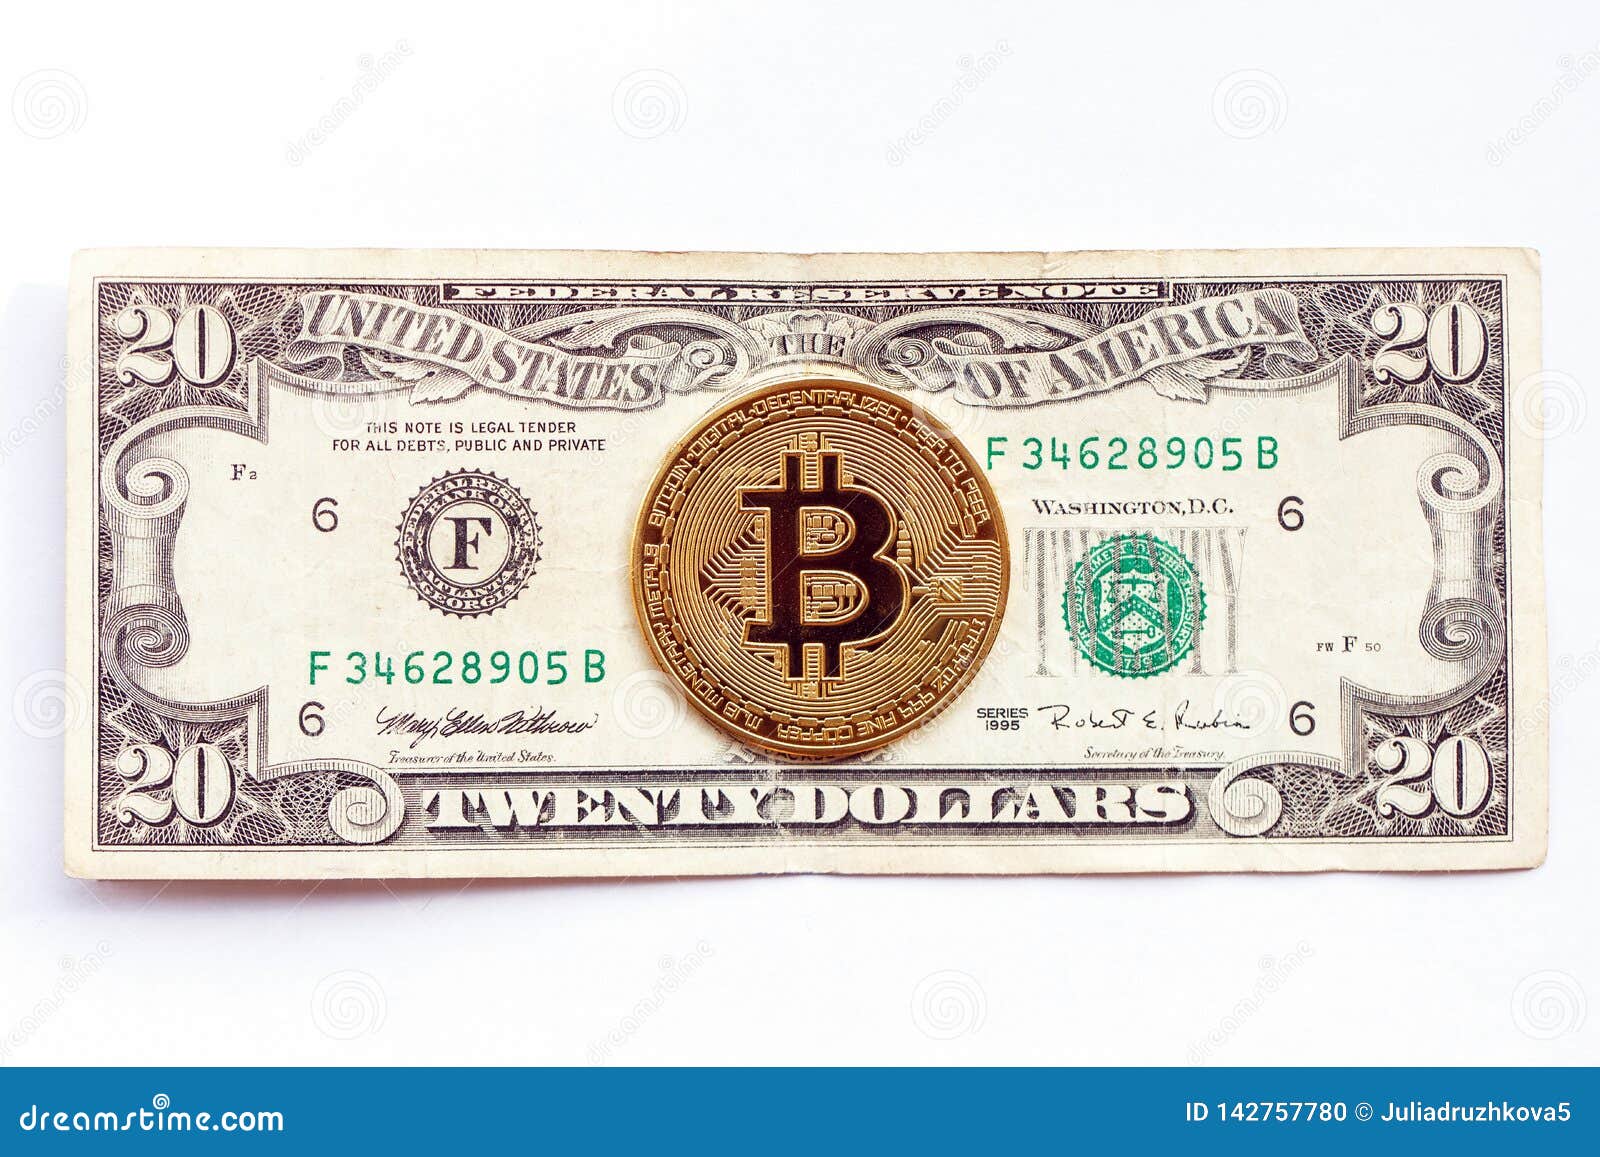 20 dollars worth of bitcoin